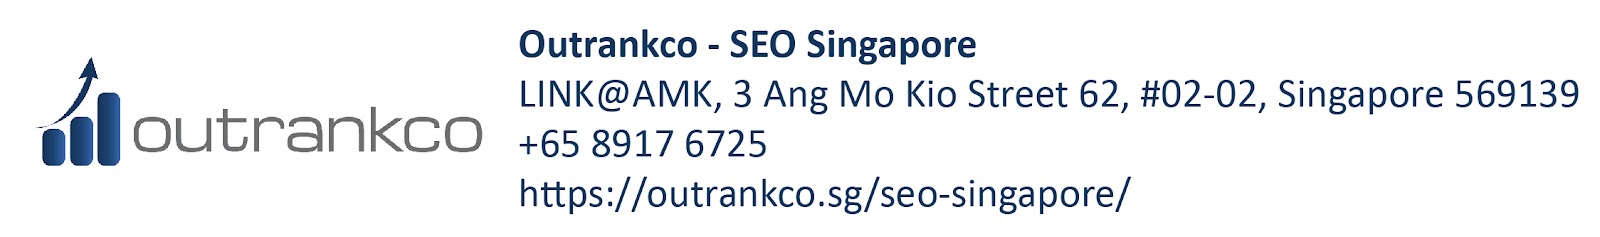 https://seo-marketing-singapore.blogspot.com